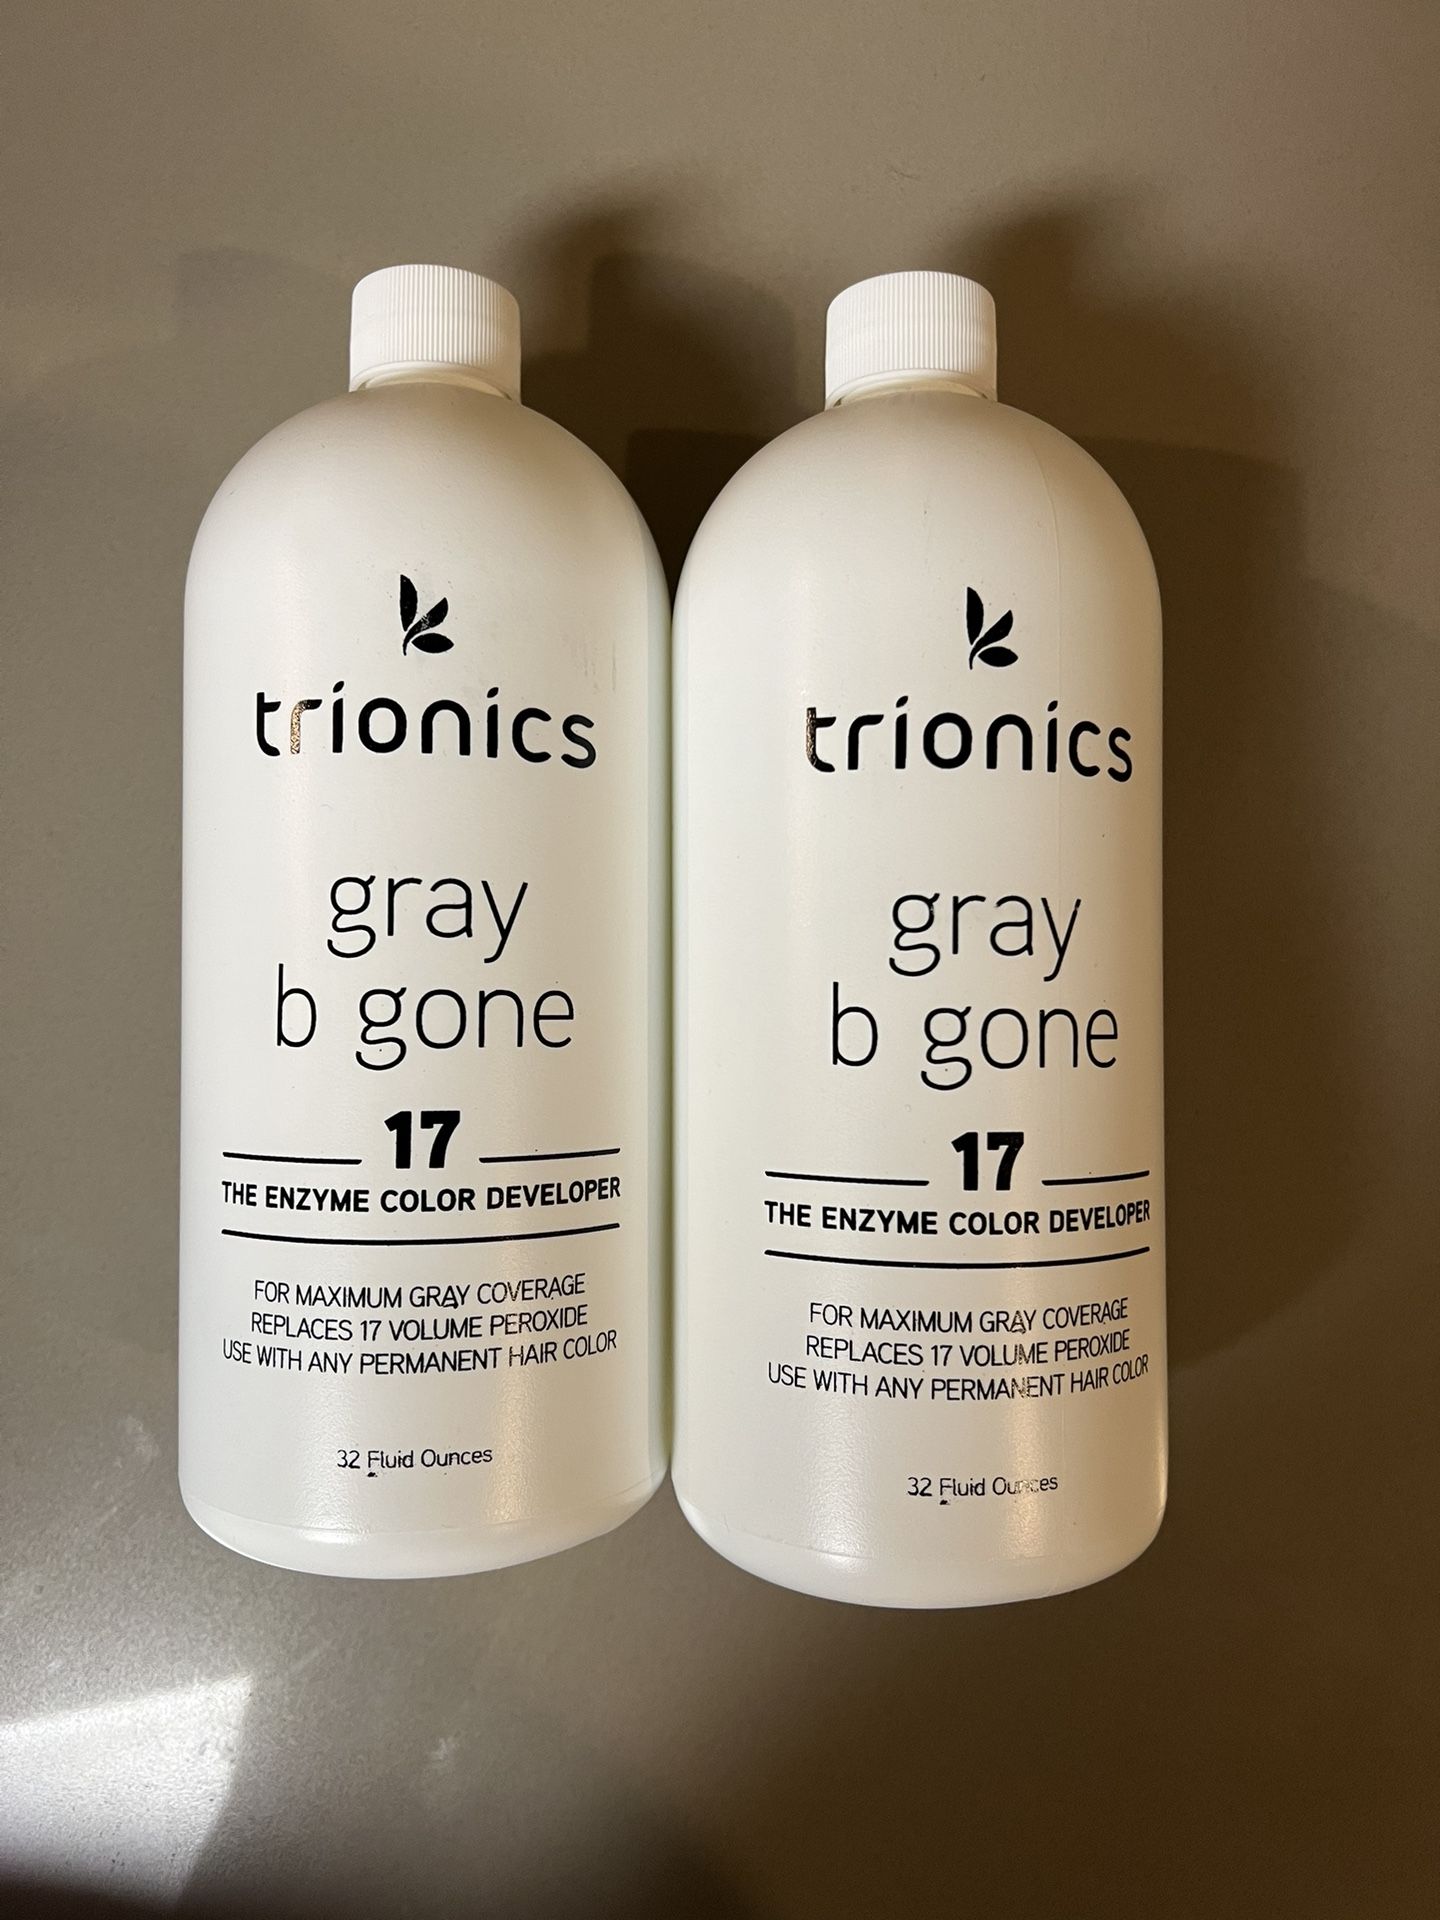 Trionics Gray B Gone 17 The Enzyme Color Developer 32 fl oz $15 Per Bottle